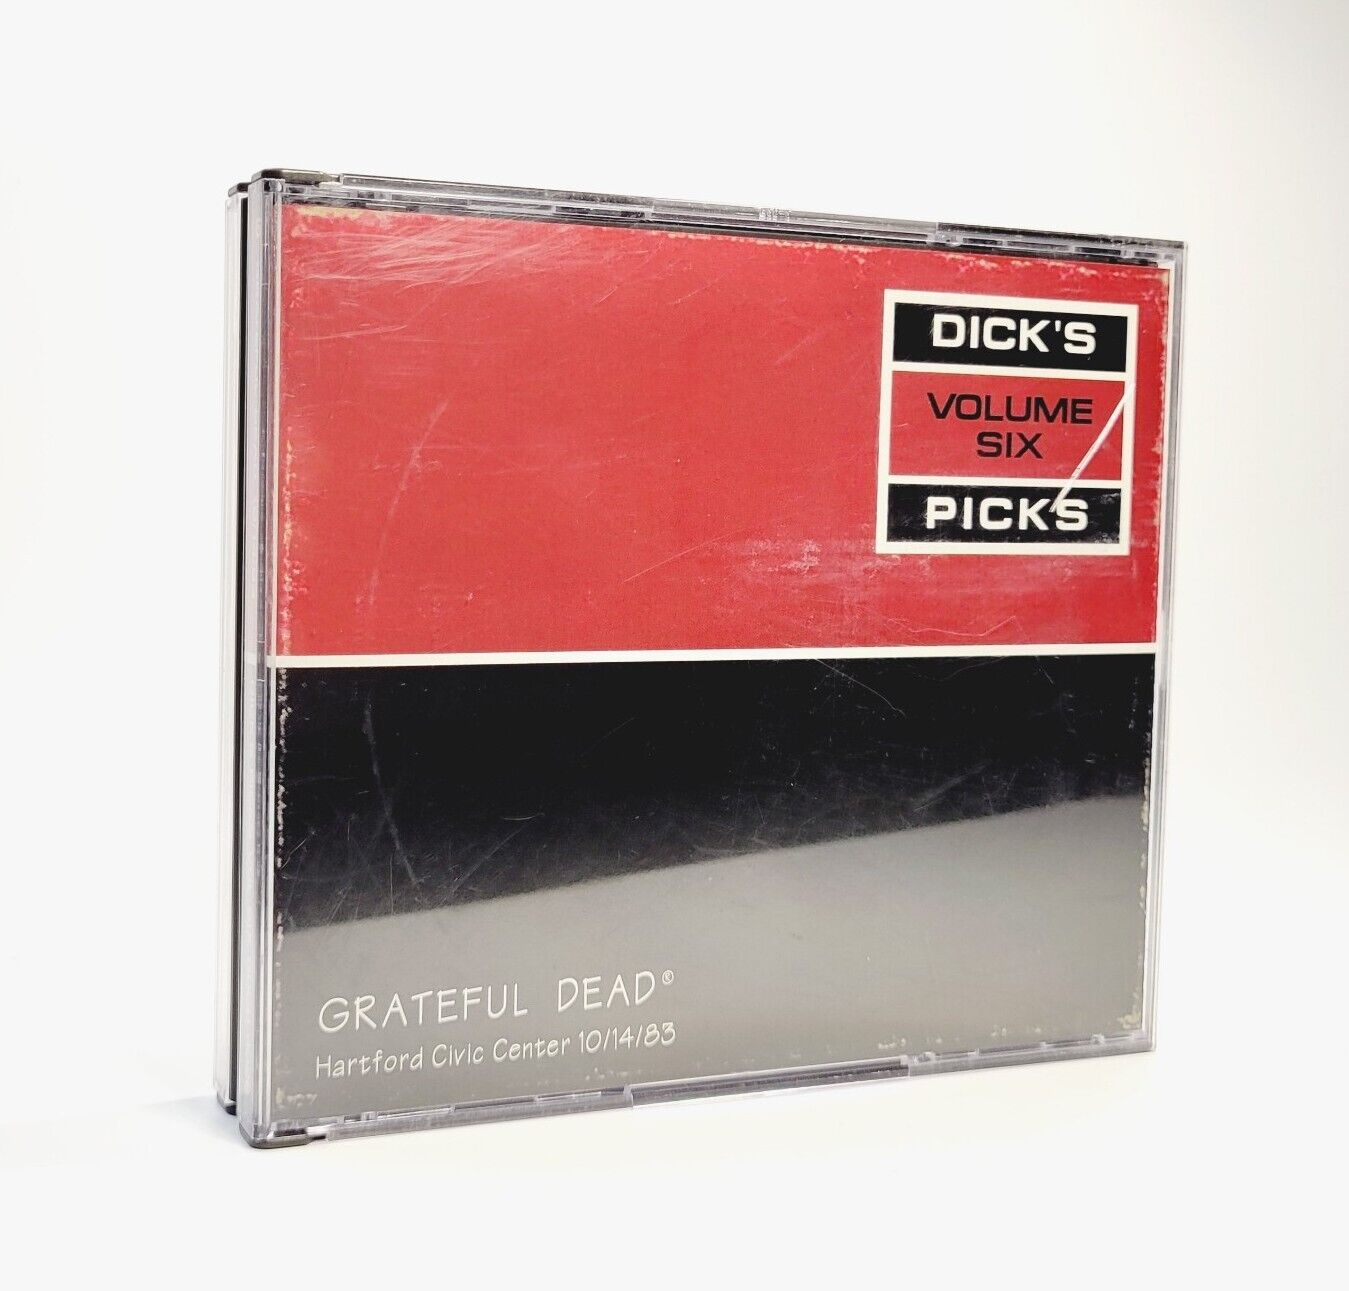 Dick's Picks, Vol. 6: Hartford Civic Center 10/14/83 by Grateful Dead (CD,...VGC